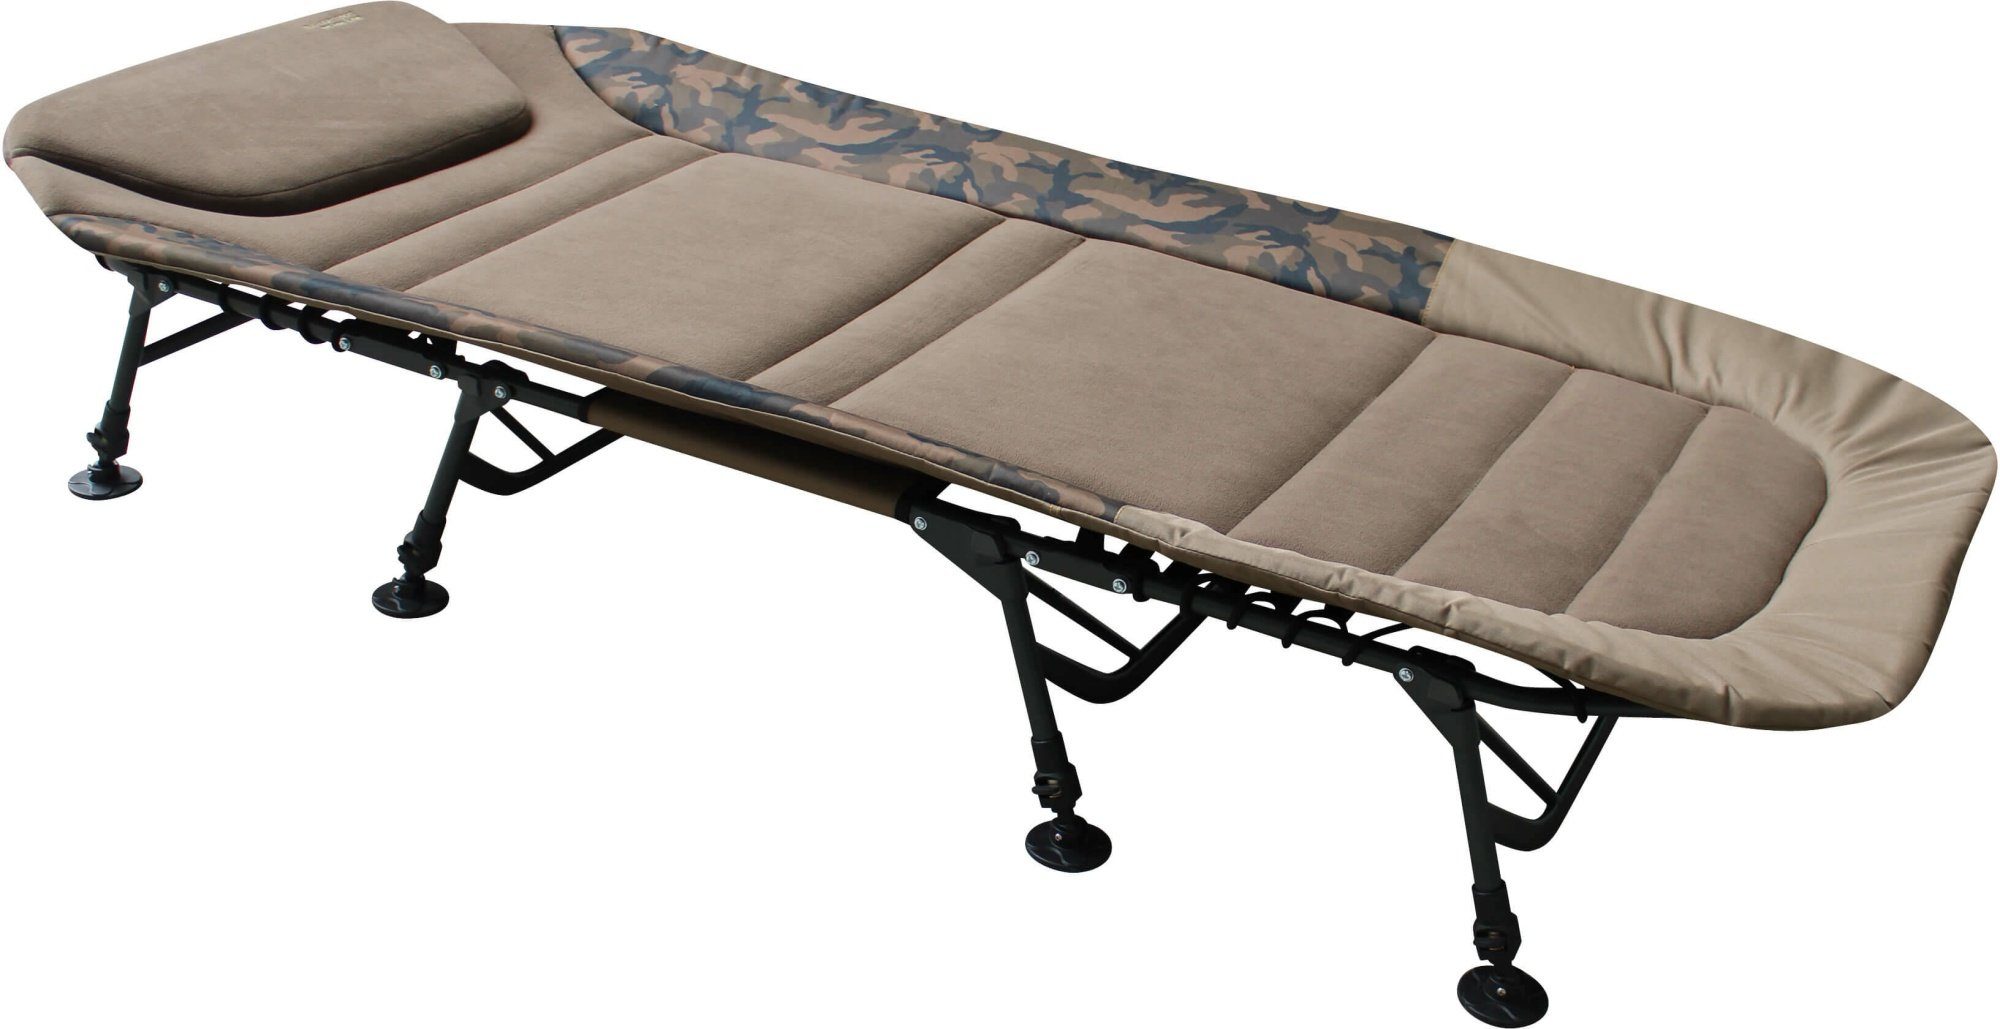 MK Angelsport Angelzelt Fort + Knox 3,5 Flatsize Man Bedchairs 2.0 MK Dome Bivy + Winterskin 3